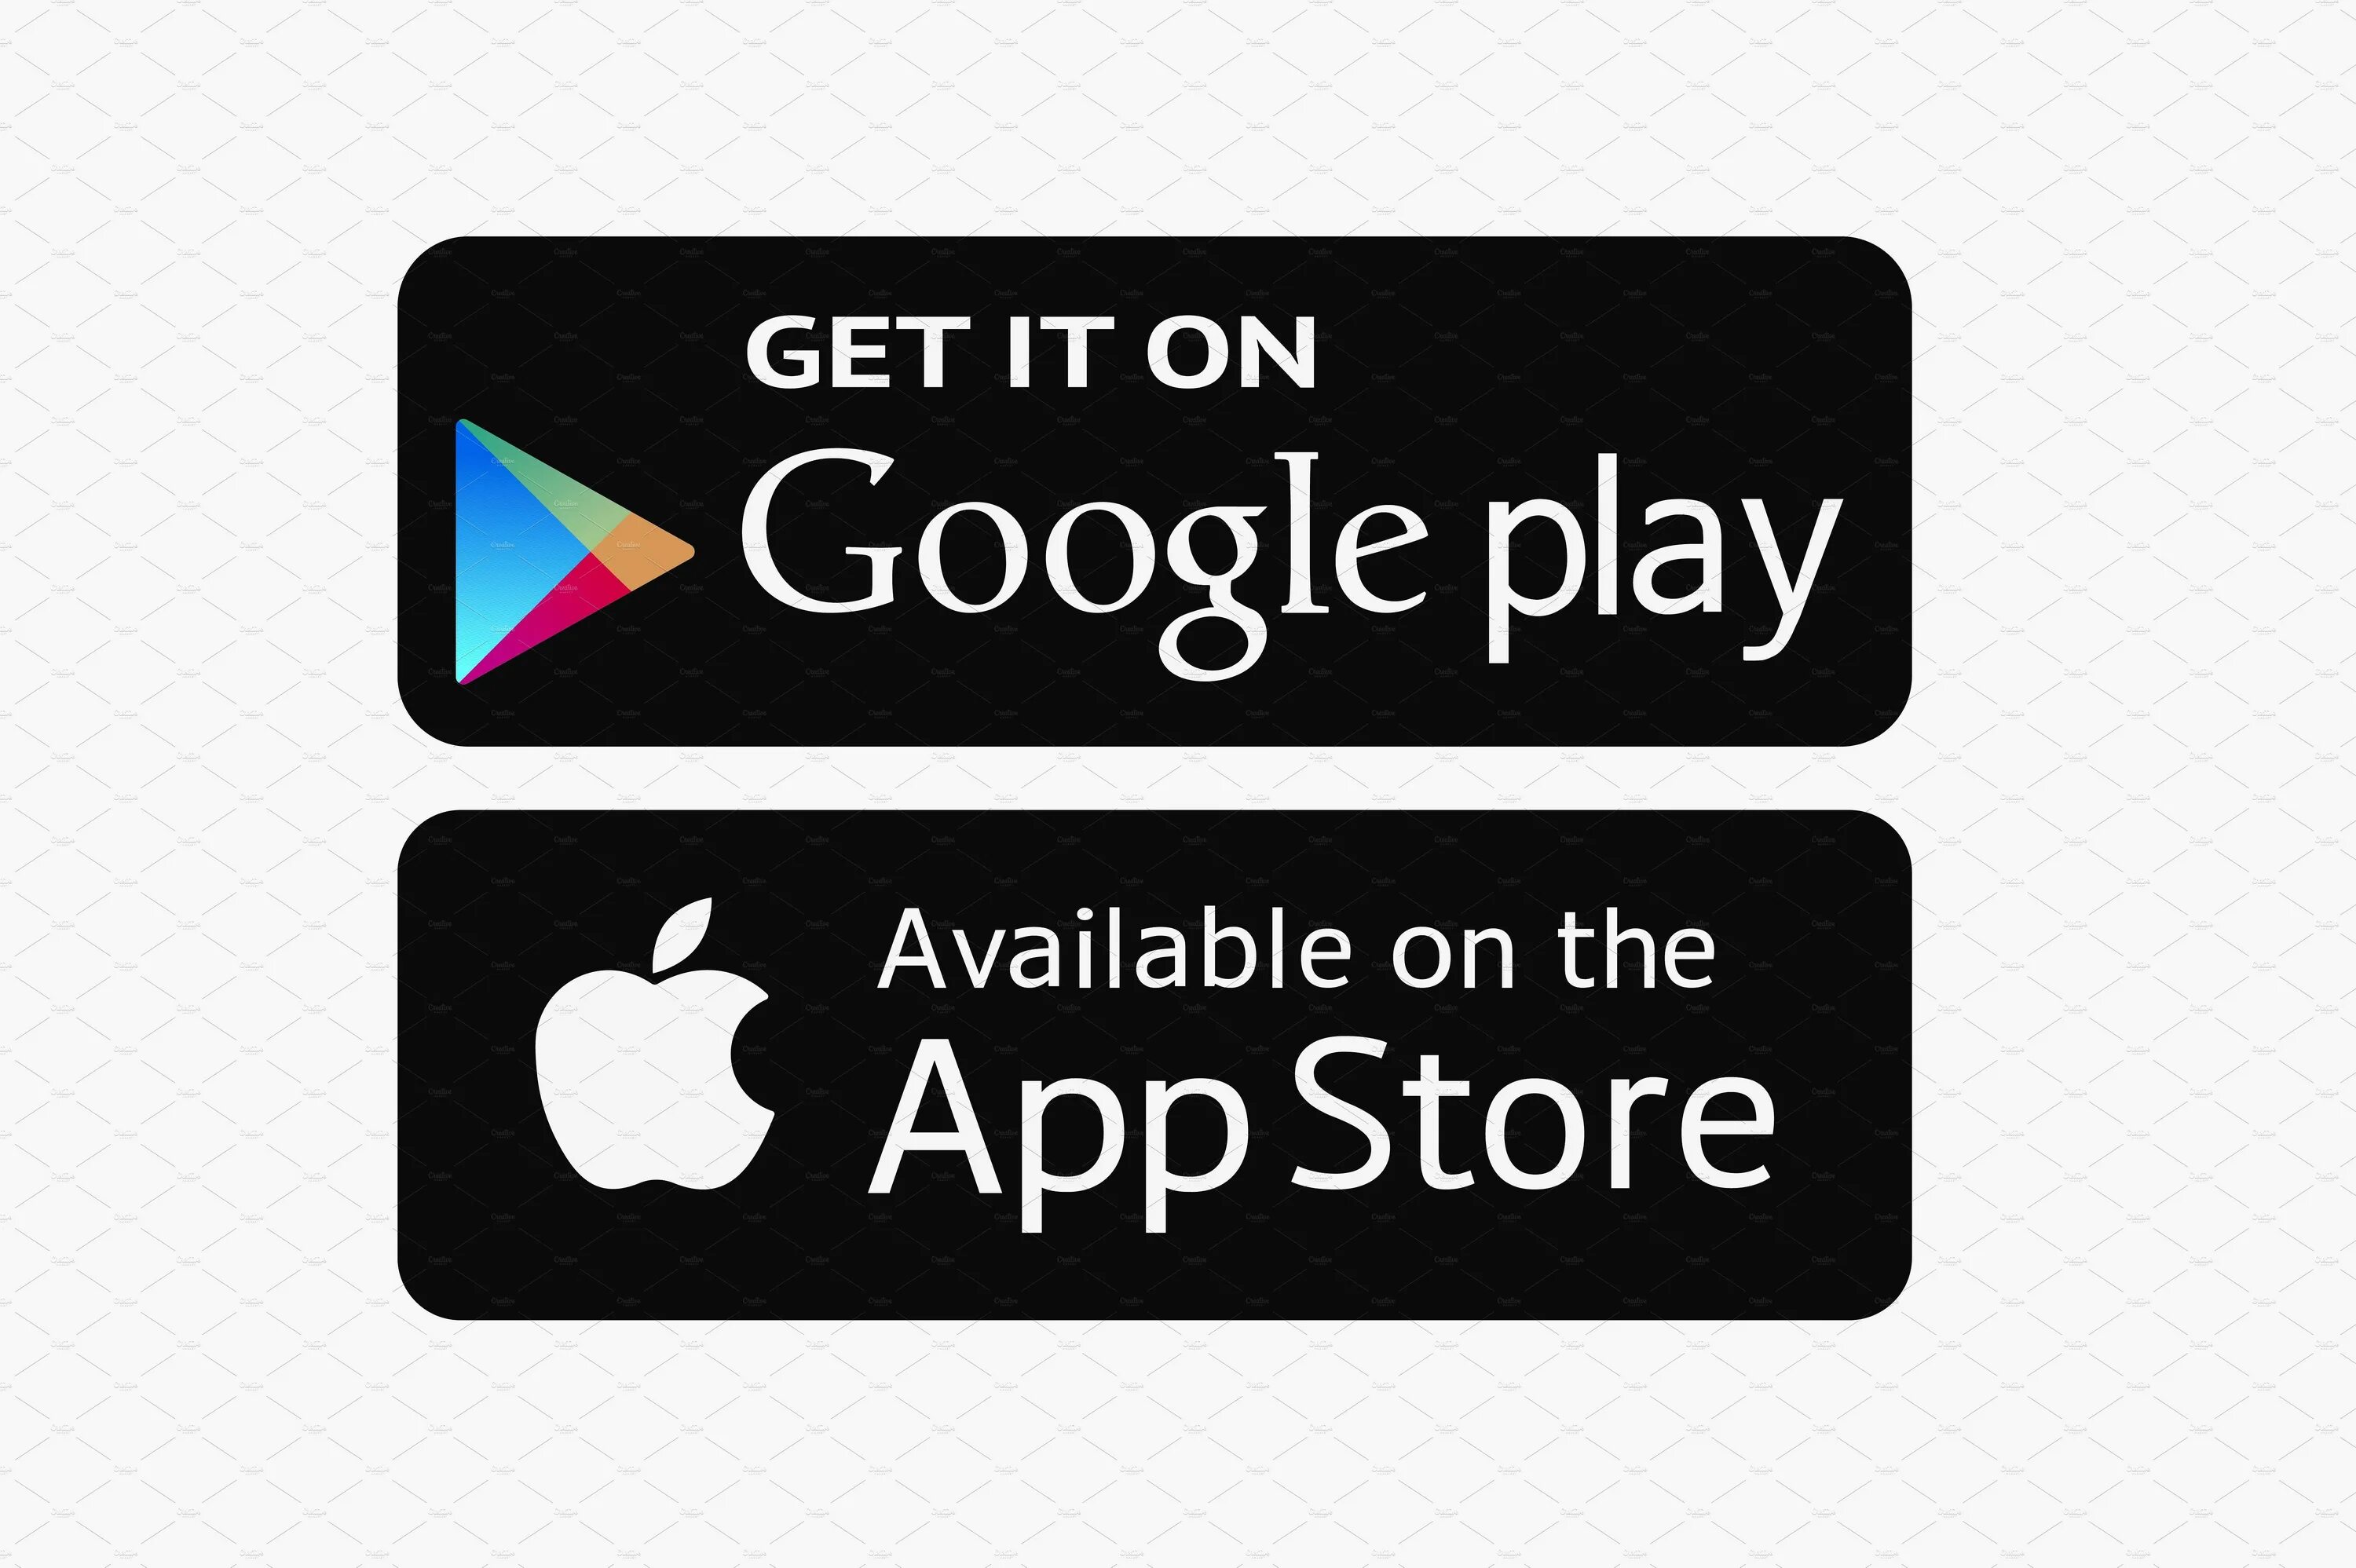 App store videos. Иконка app Store. Apple Store значок. App Store Google Play. Доступно в app Store.